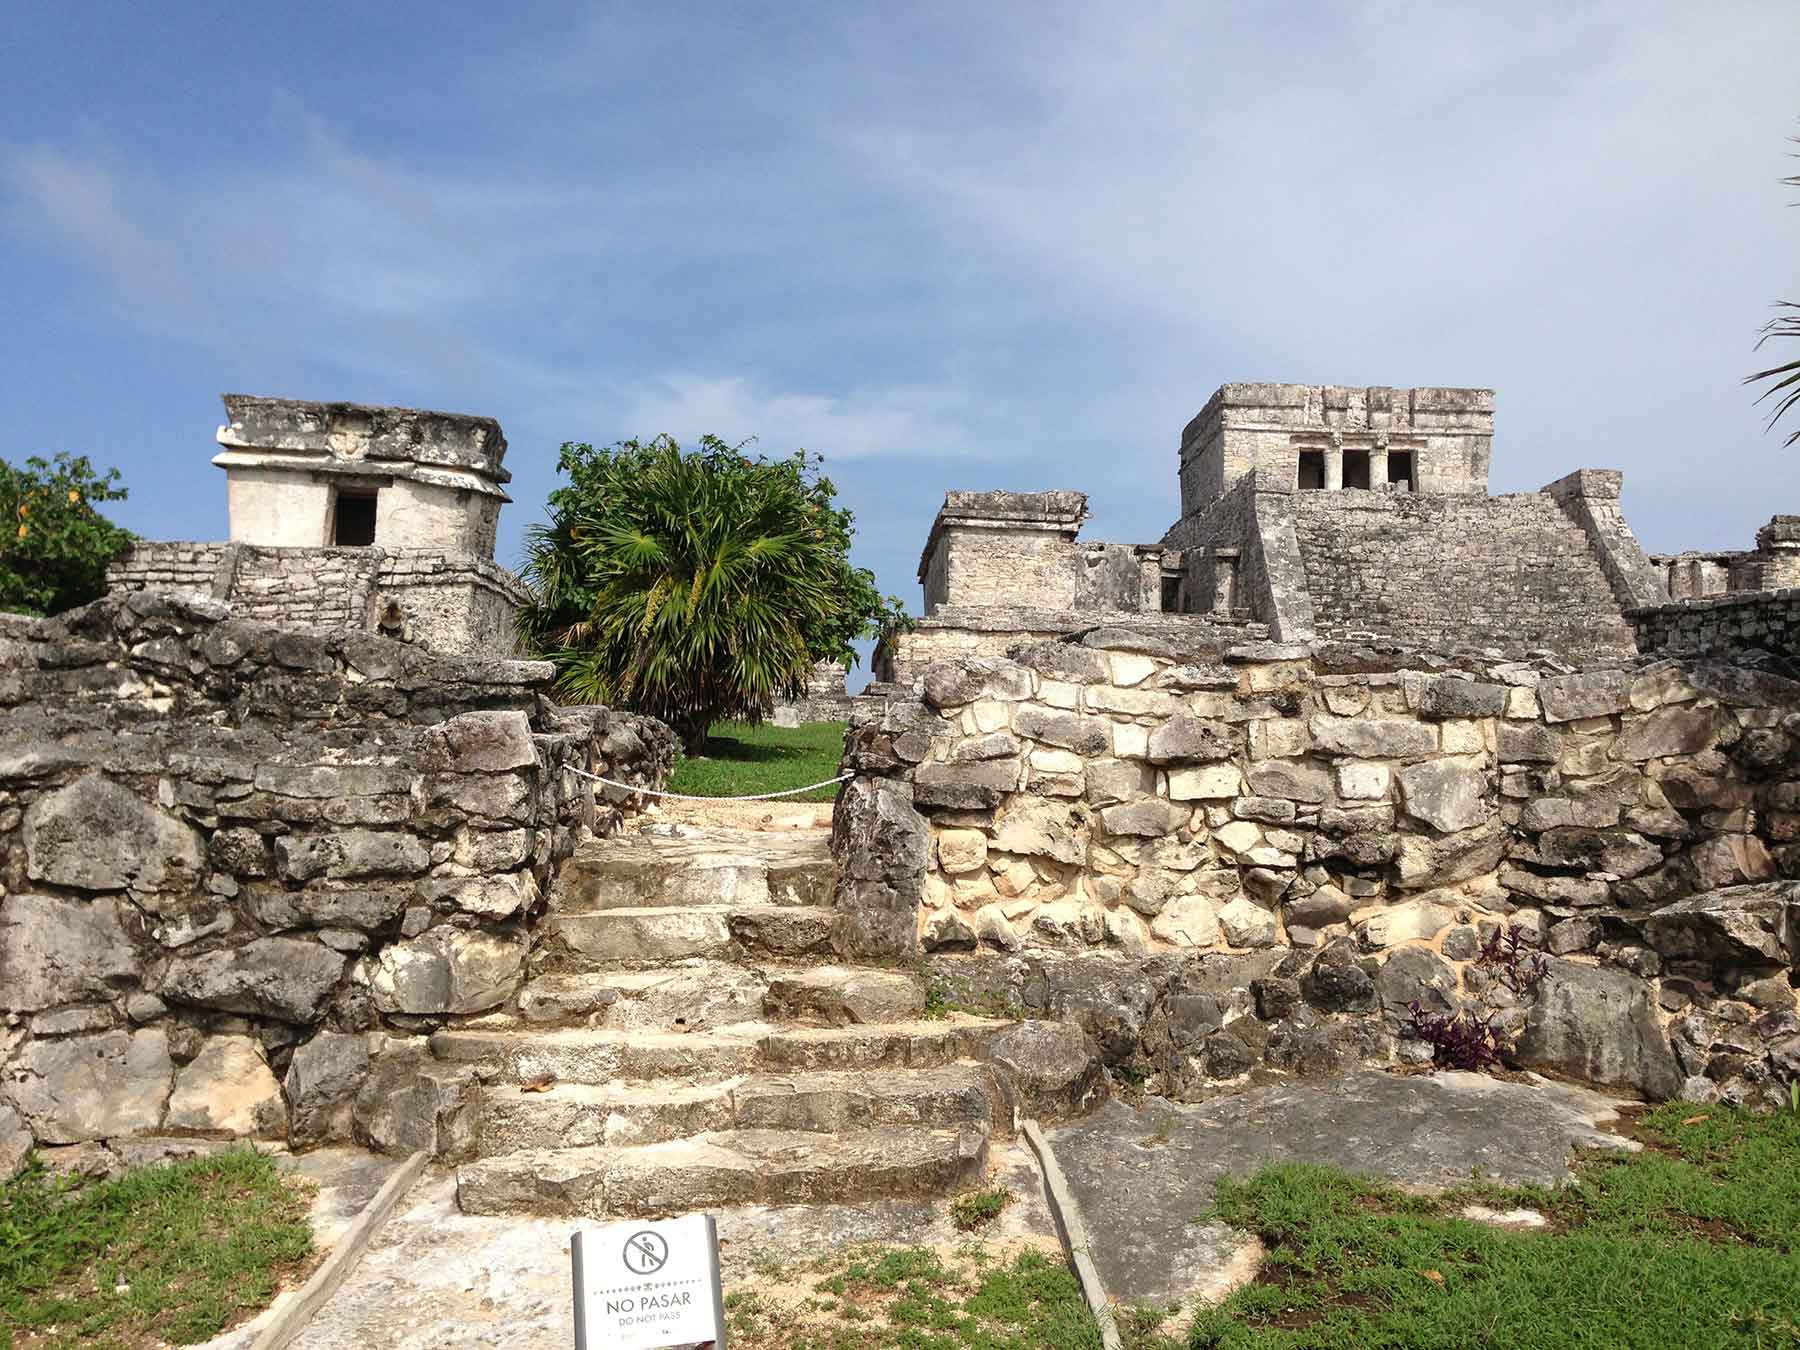 7 Days Yucatan Peninsula Multi Day Tour | Group Discount Rate $1749.00 US dollars per person